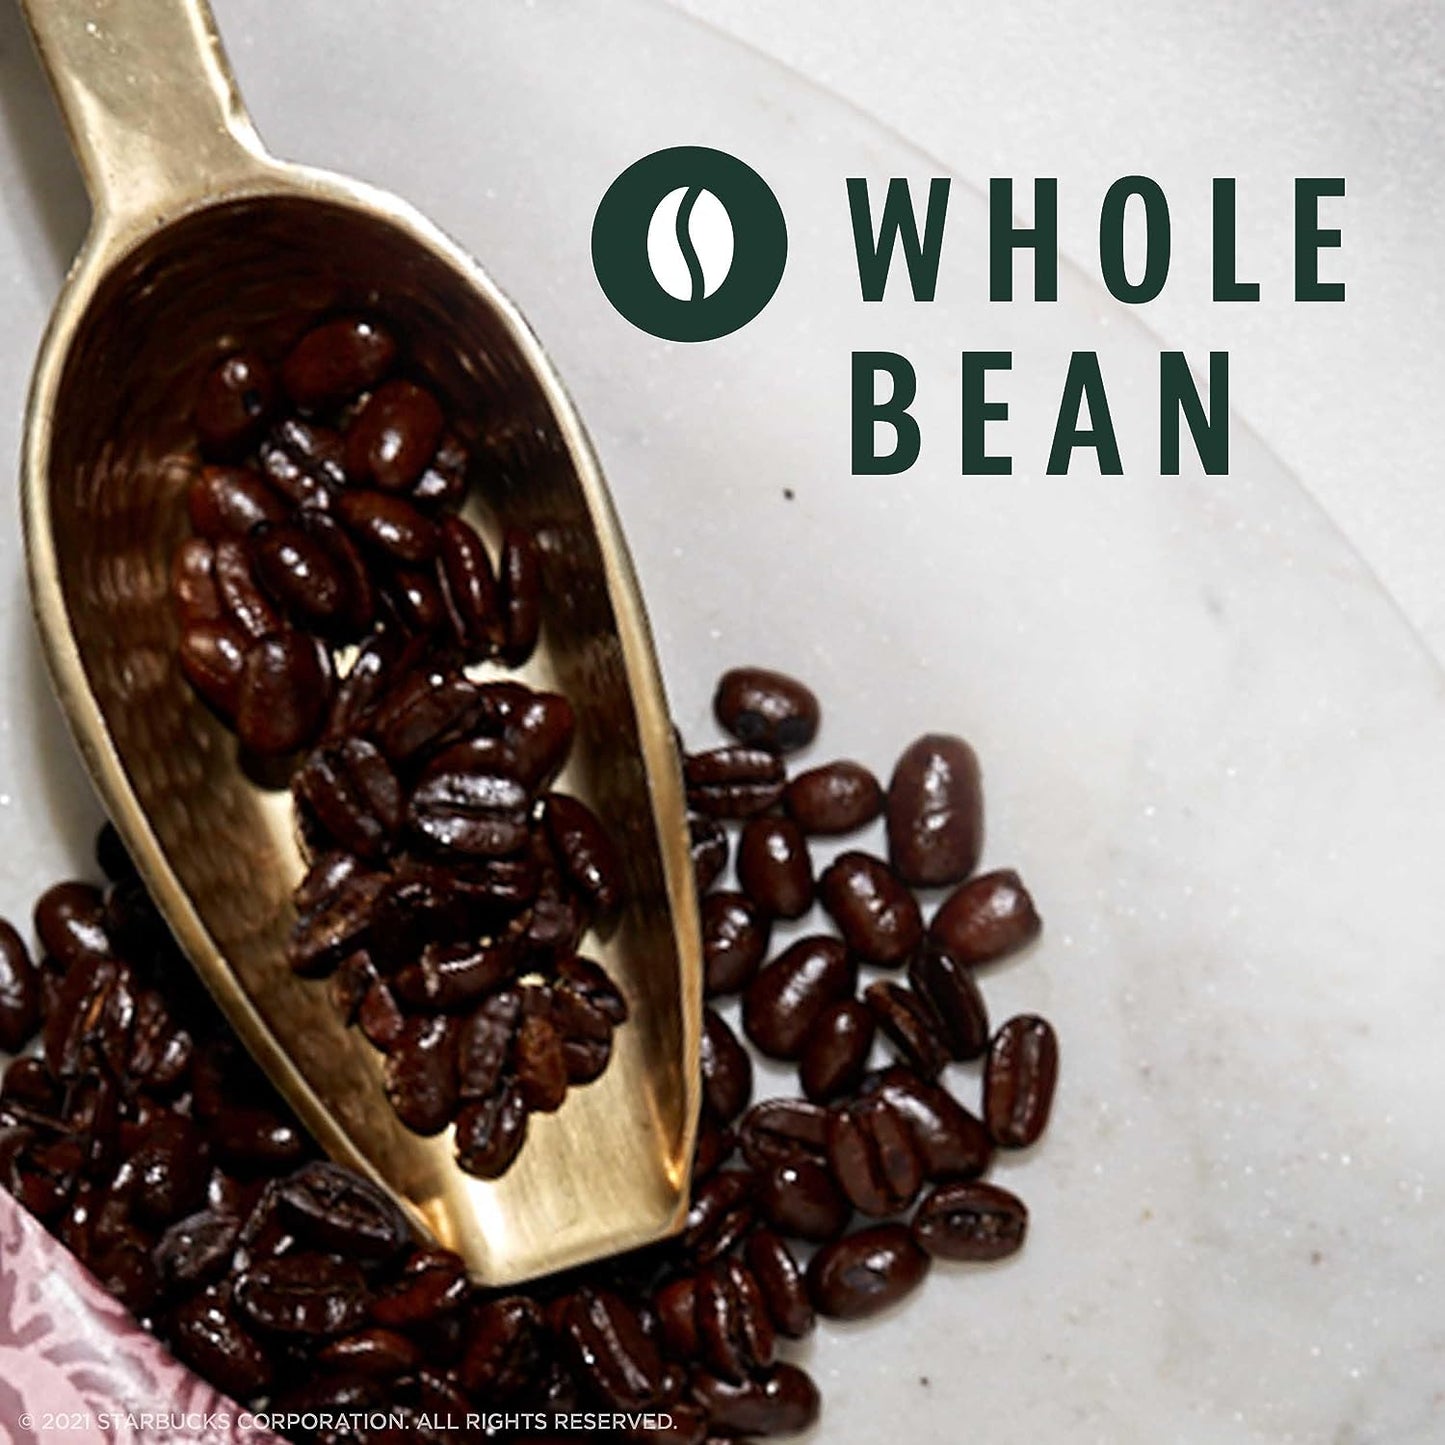 Starbucks Dark Roast Whole Bean Coffee — Espresso — 100% Arabica — 1 bag (18 oz) - Premium Coffee from Concordia Style Boutique - Just $17.63! Shop now at Concordia Style Boutique